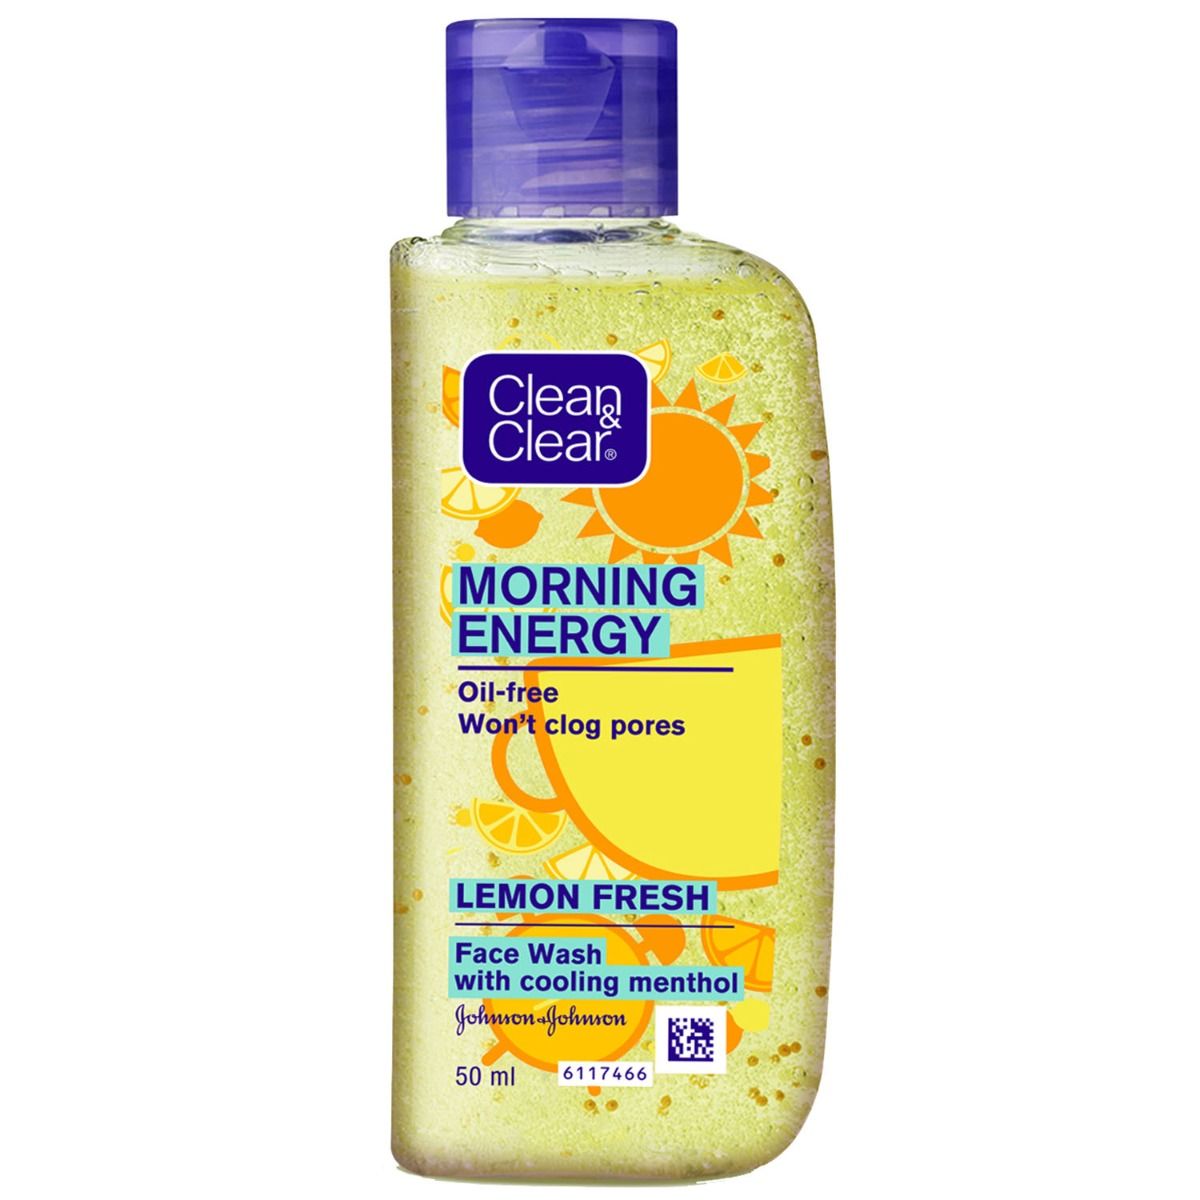 Buy Clean & Clear Morning Energy Oil-Free Lemon Fresh Face Wash, 50 ml Online